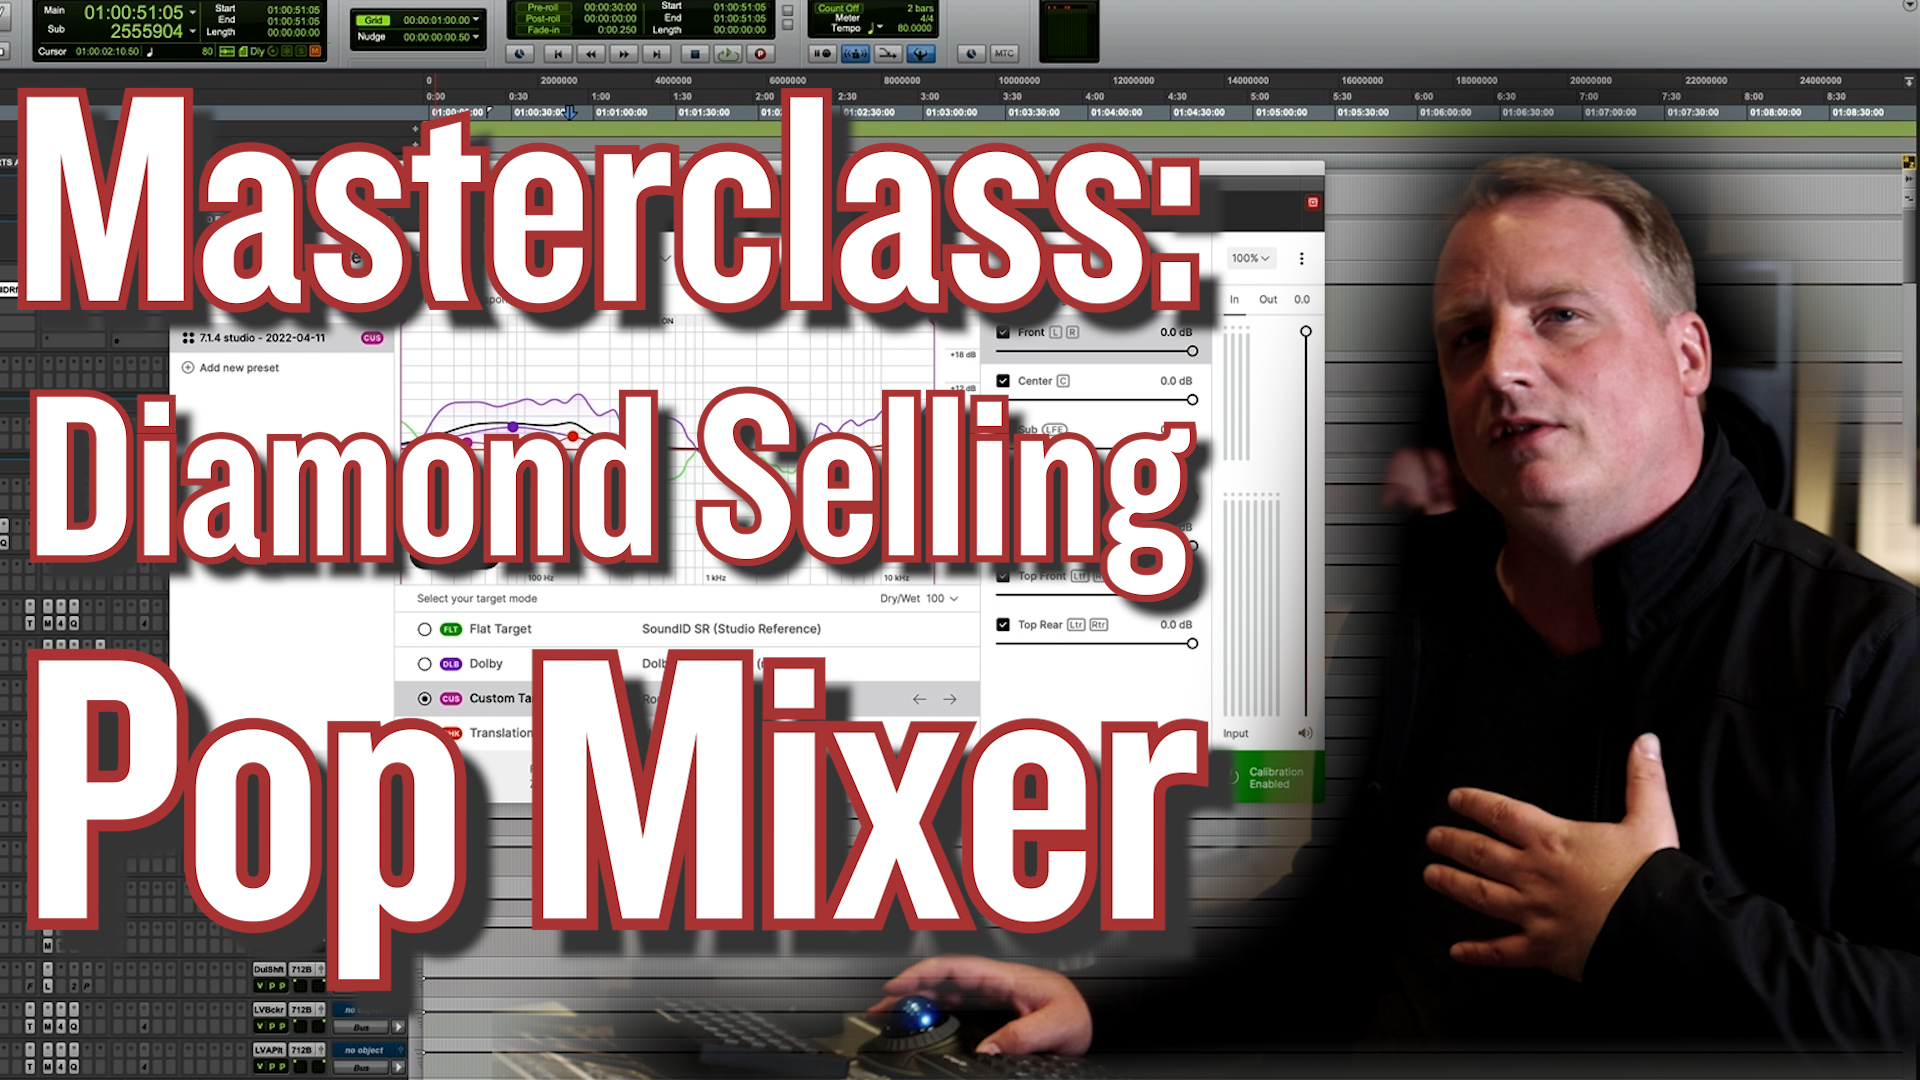 Masterclass: Diamond Selling Mixer Richard Furch [Prince, Jay-Z, Frank Ocean, The Weeknd]